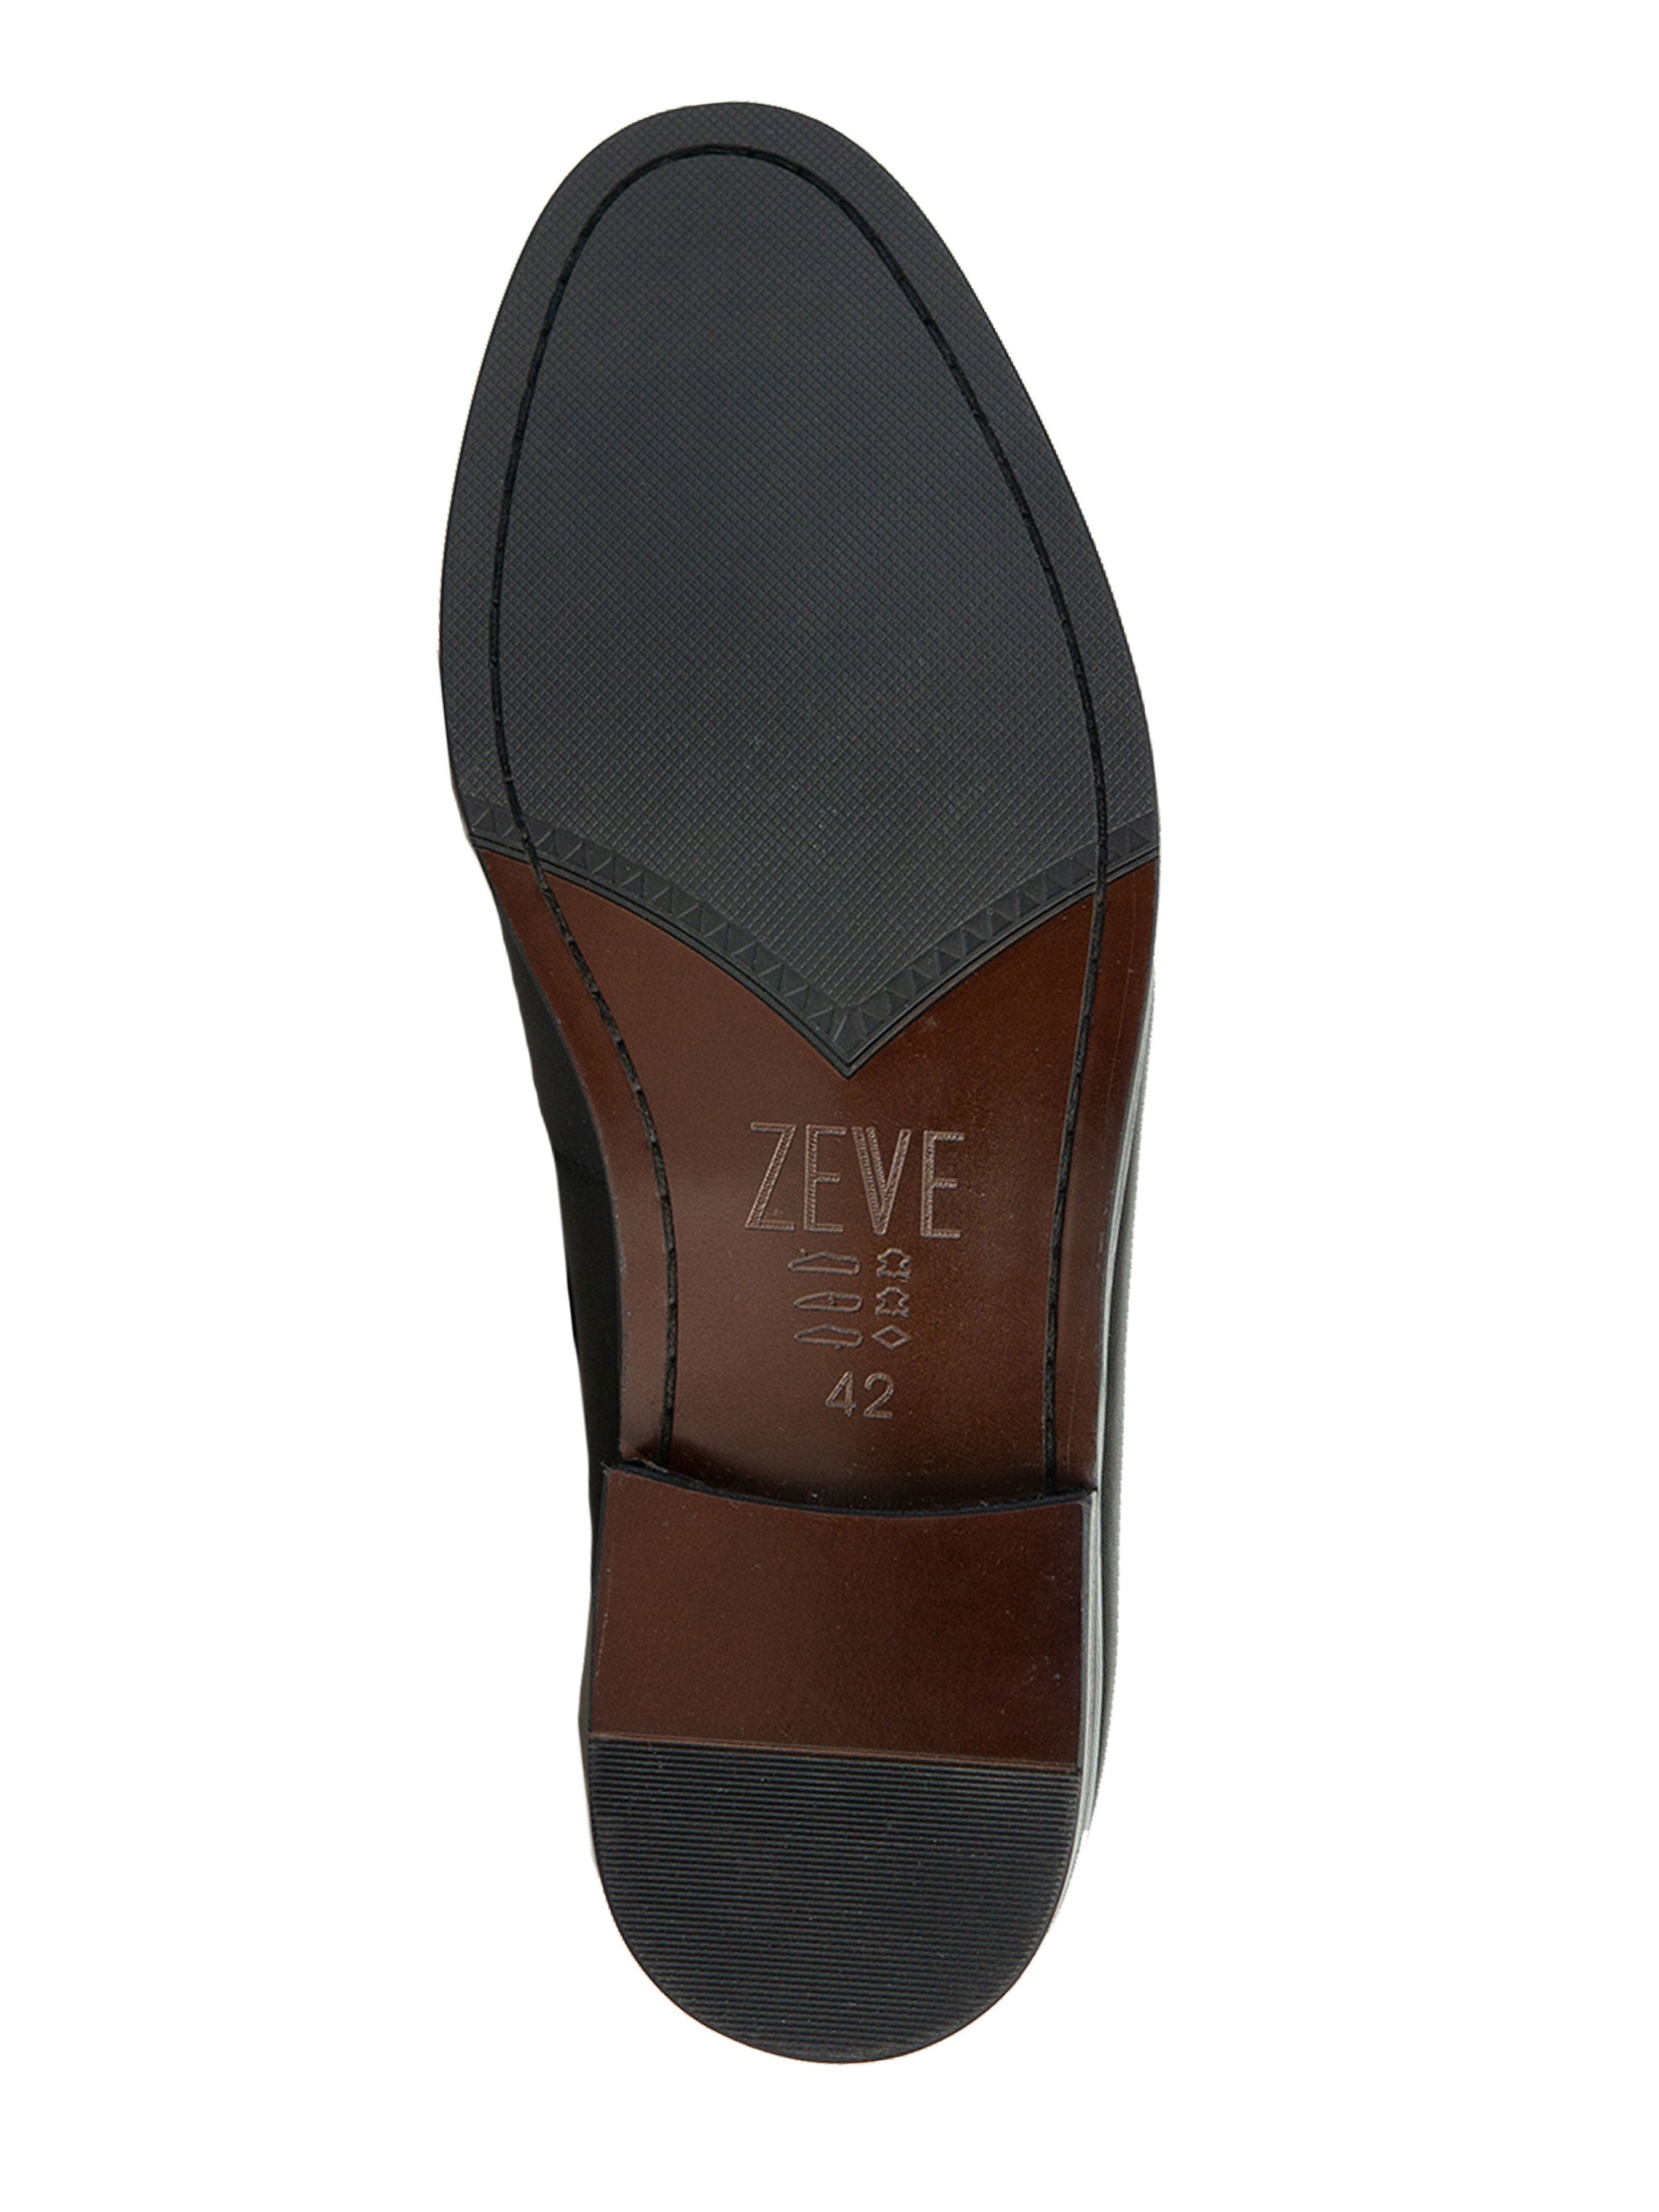 Double Monk Strap Brogue Wingtip - Duo-Tone Cognac Tan (Hand Painted Patina) - Zeve Shoes